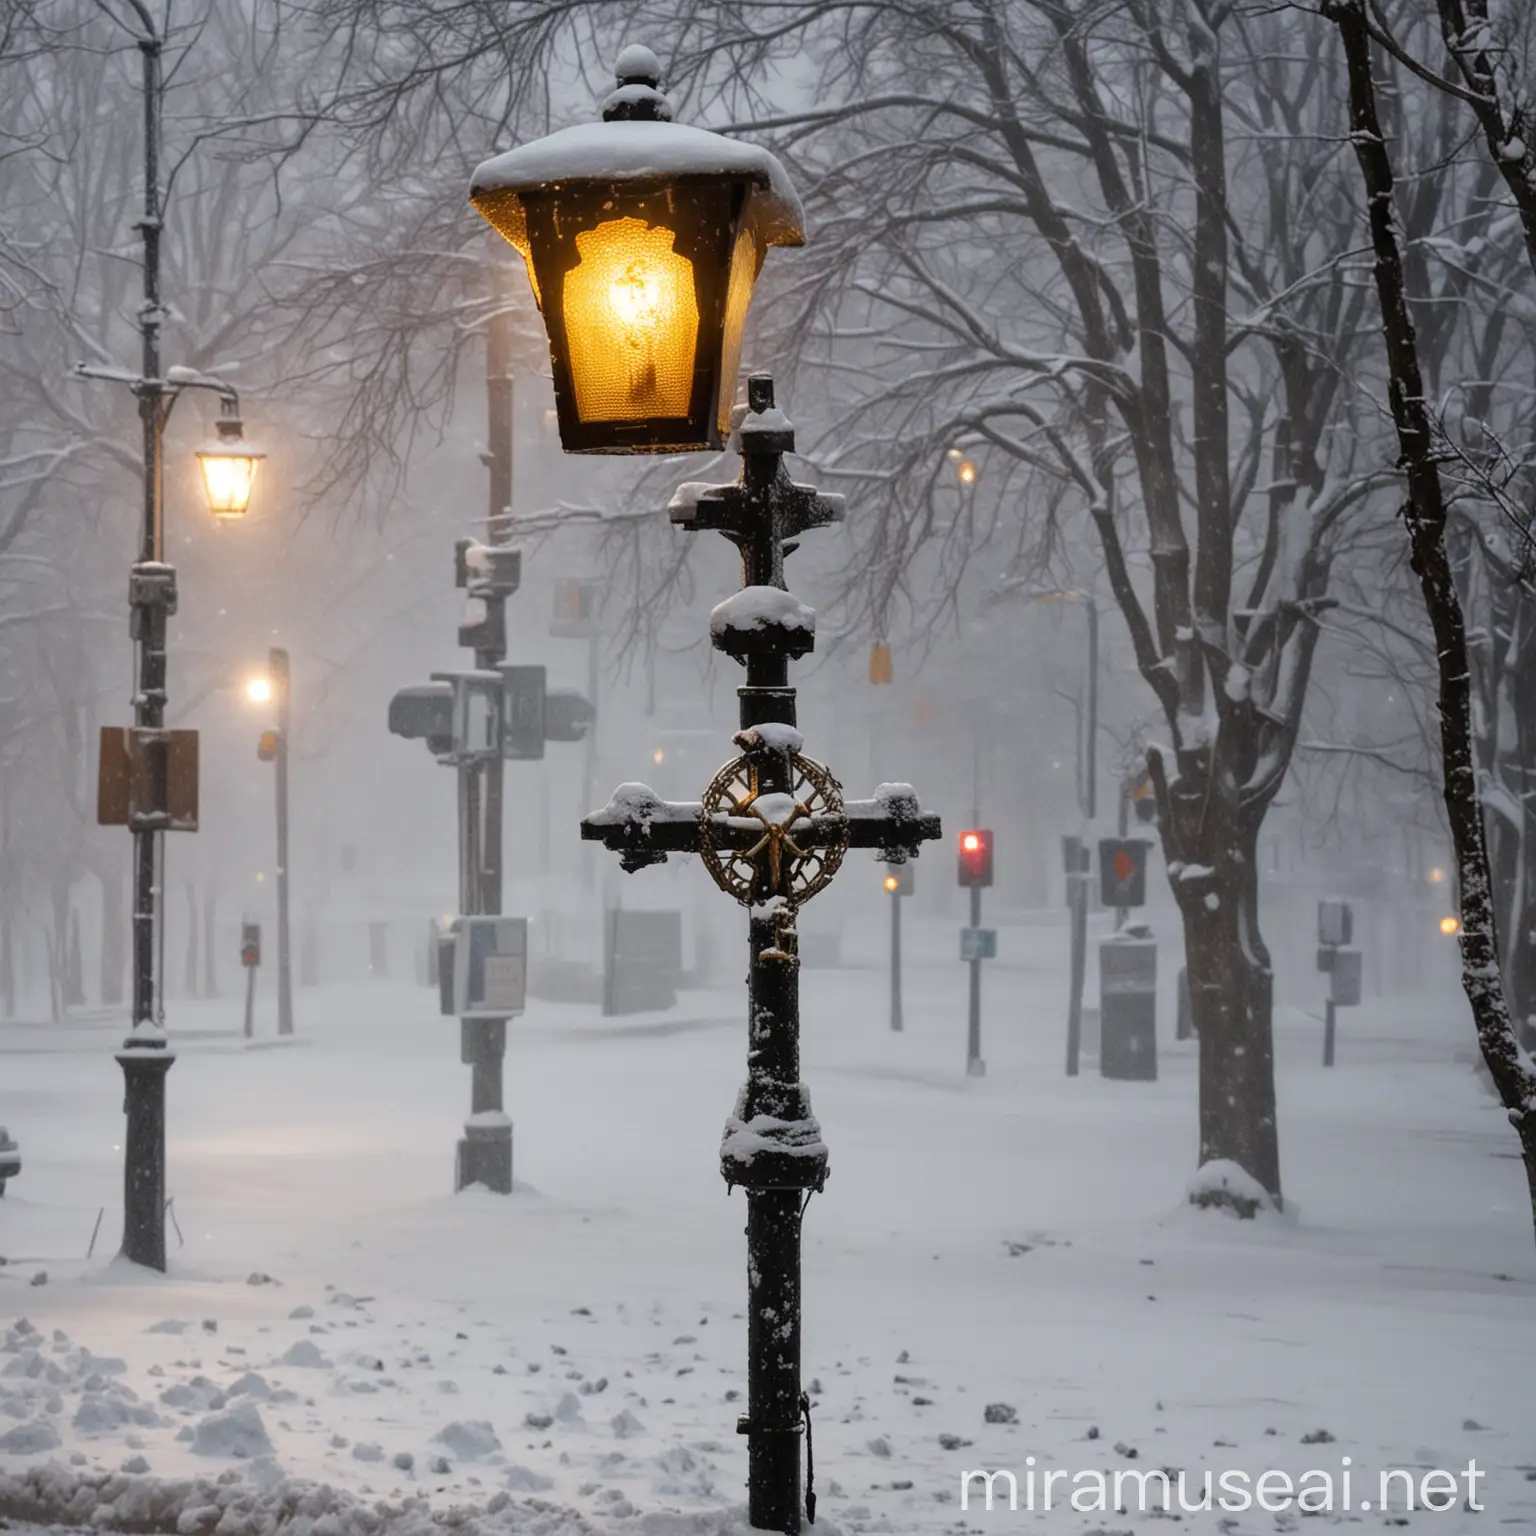 Orthodox Cross and Street Lamp in Snowstorm Night Scene